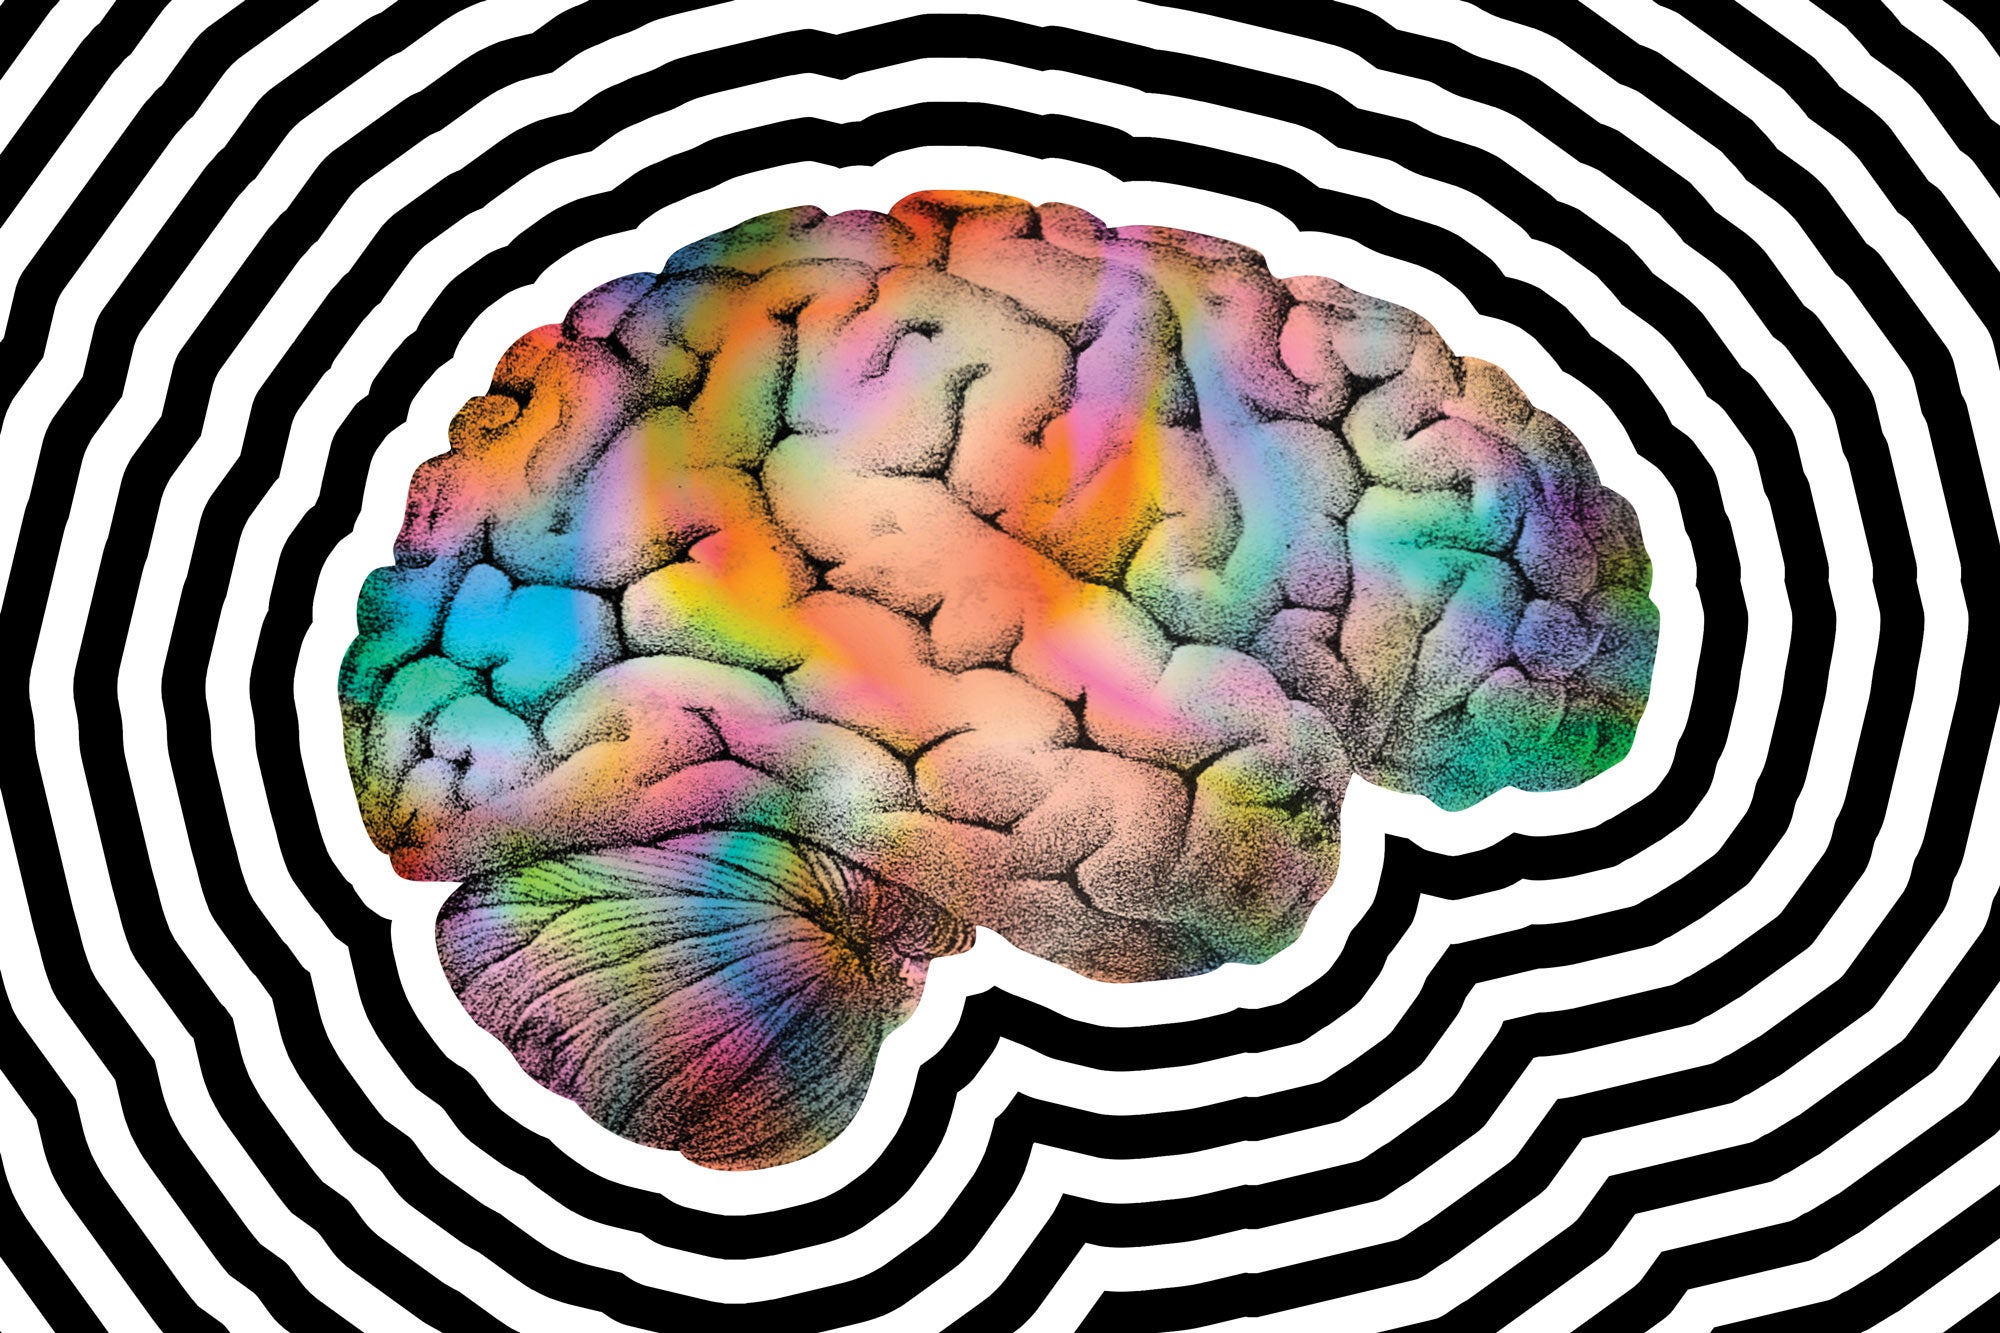 analogizes hallucinogenic effects of magic mushrooms on the human brain